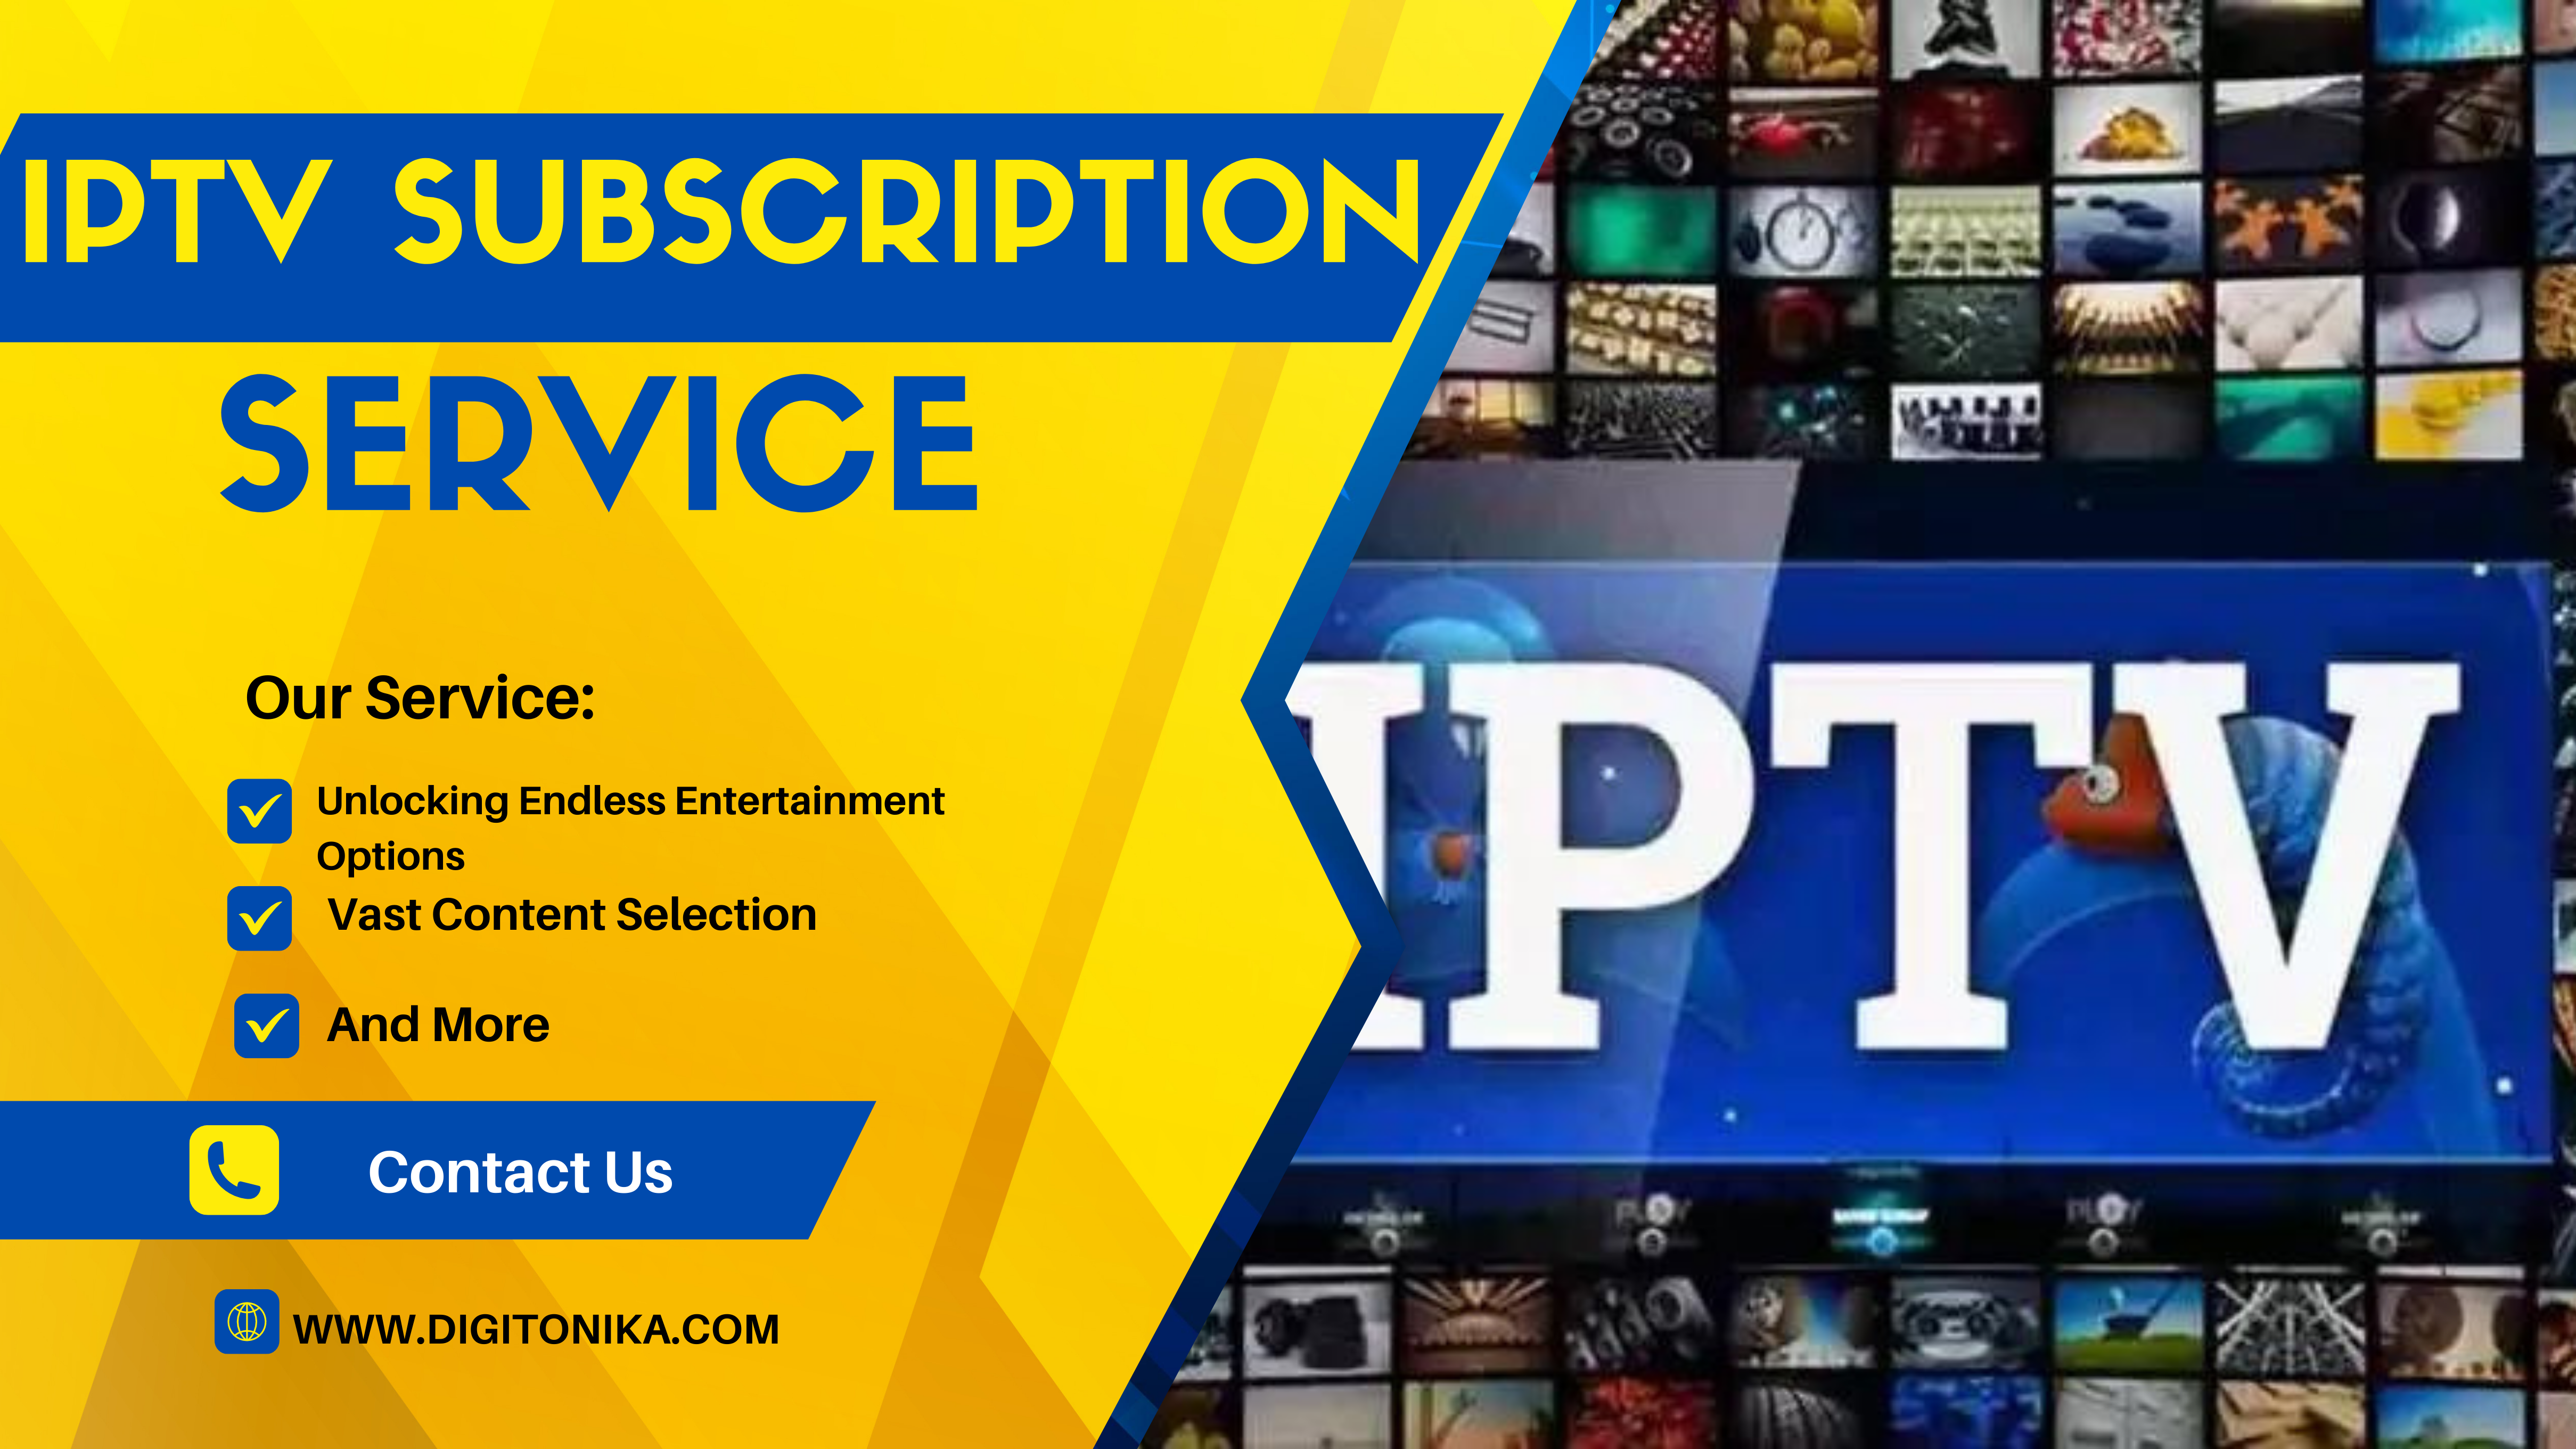 IPTV Subscription Service: Unlocking Endless Entertainment Options